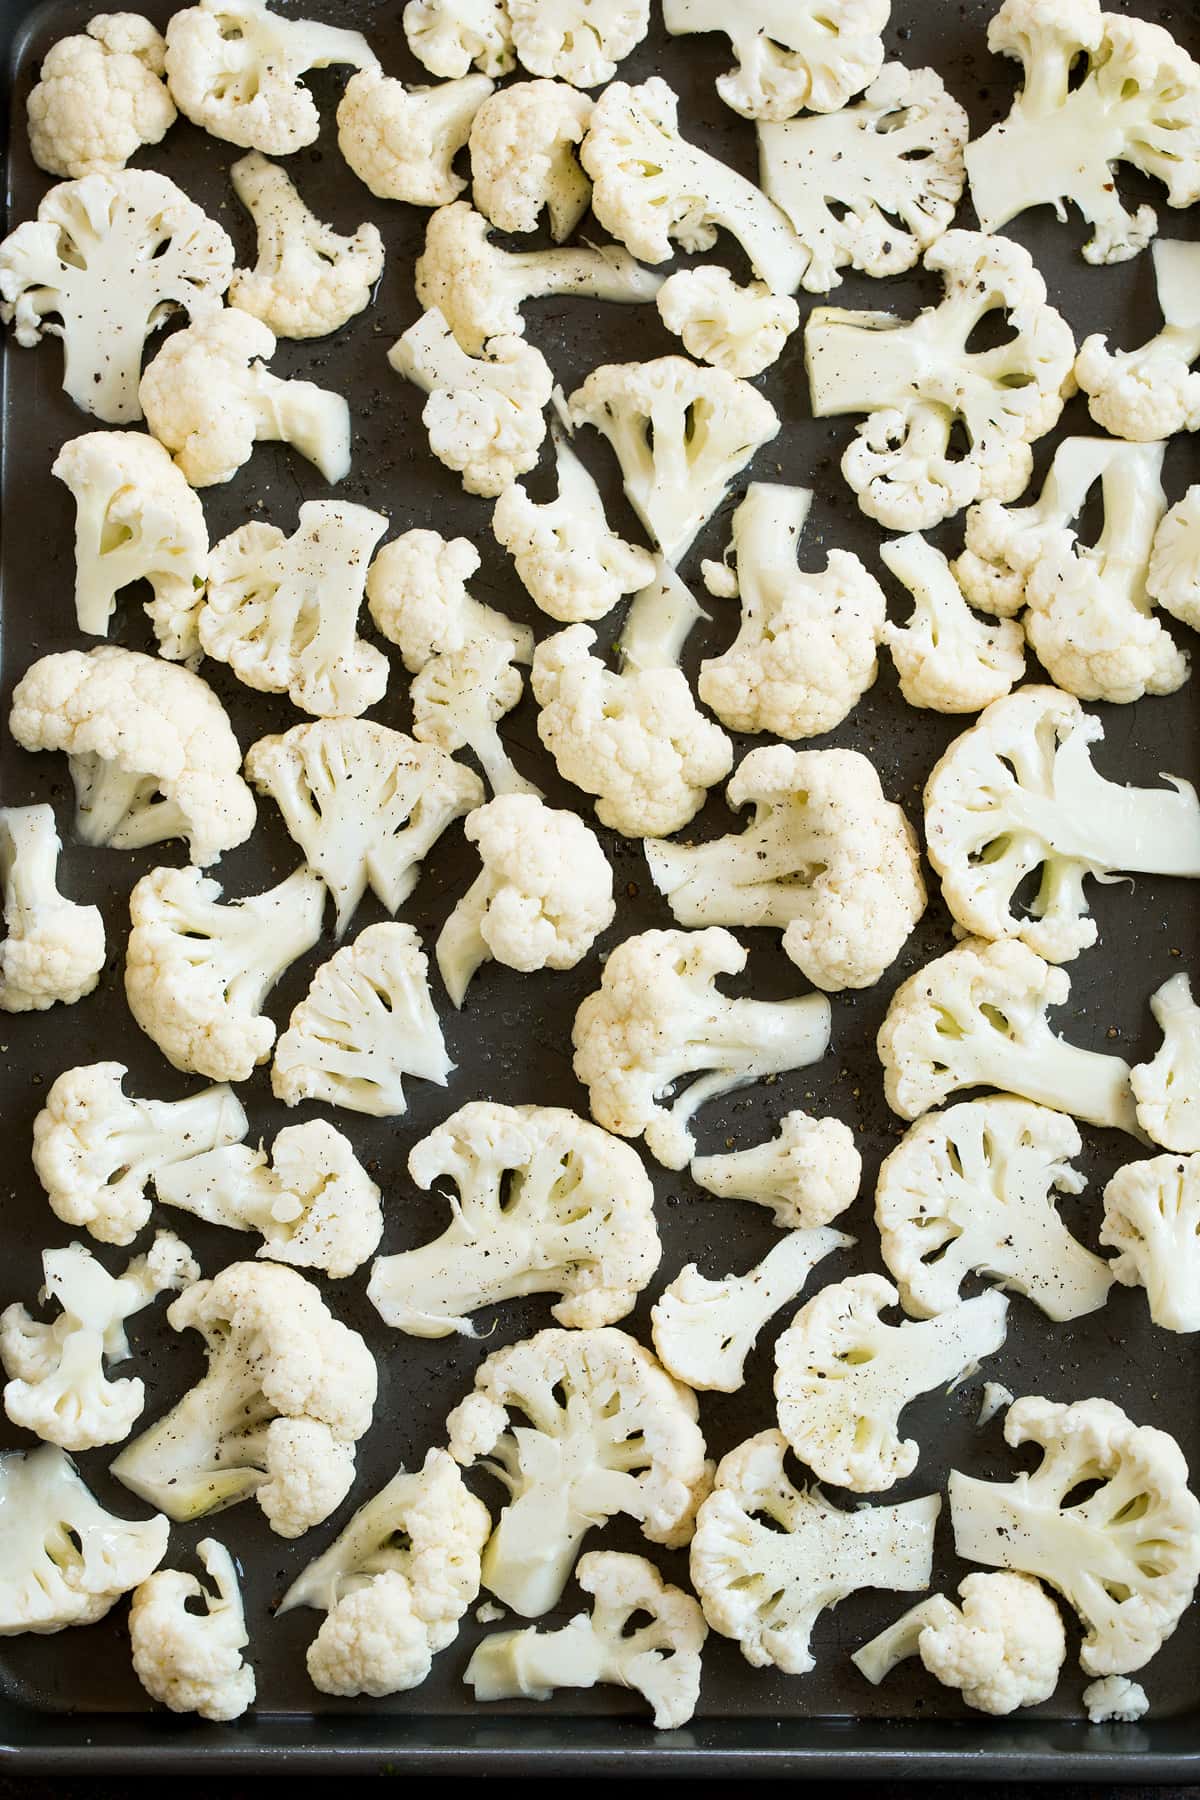 Cauliflower florets on a baking sheet shown before roasting.